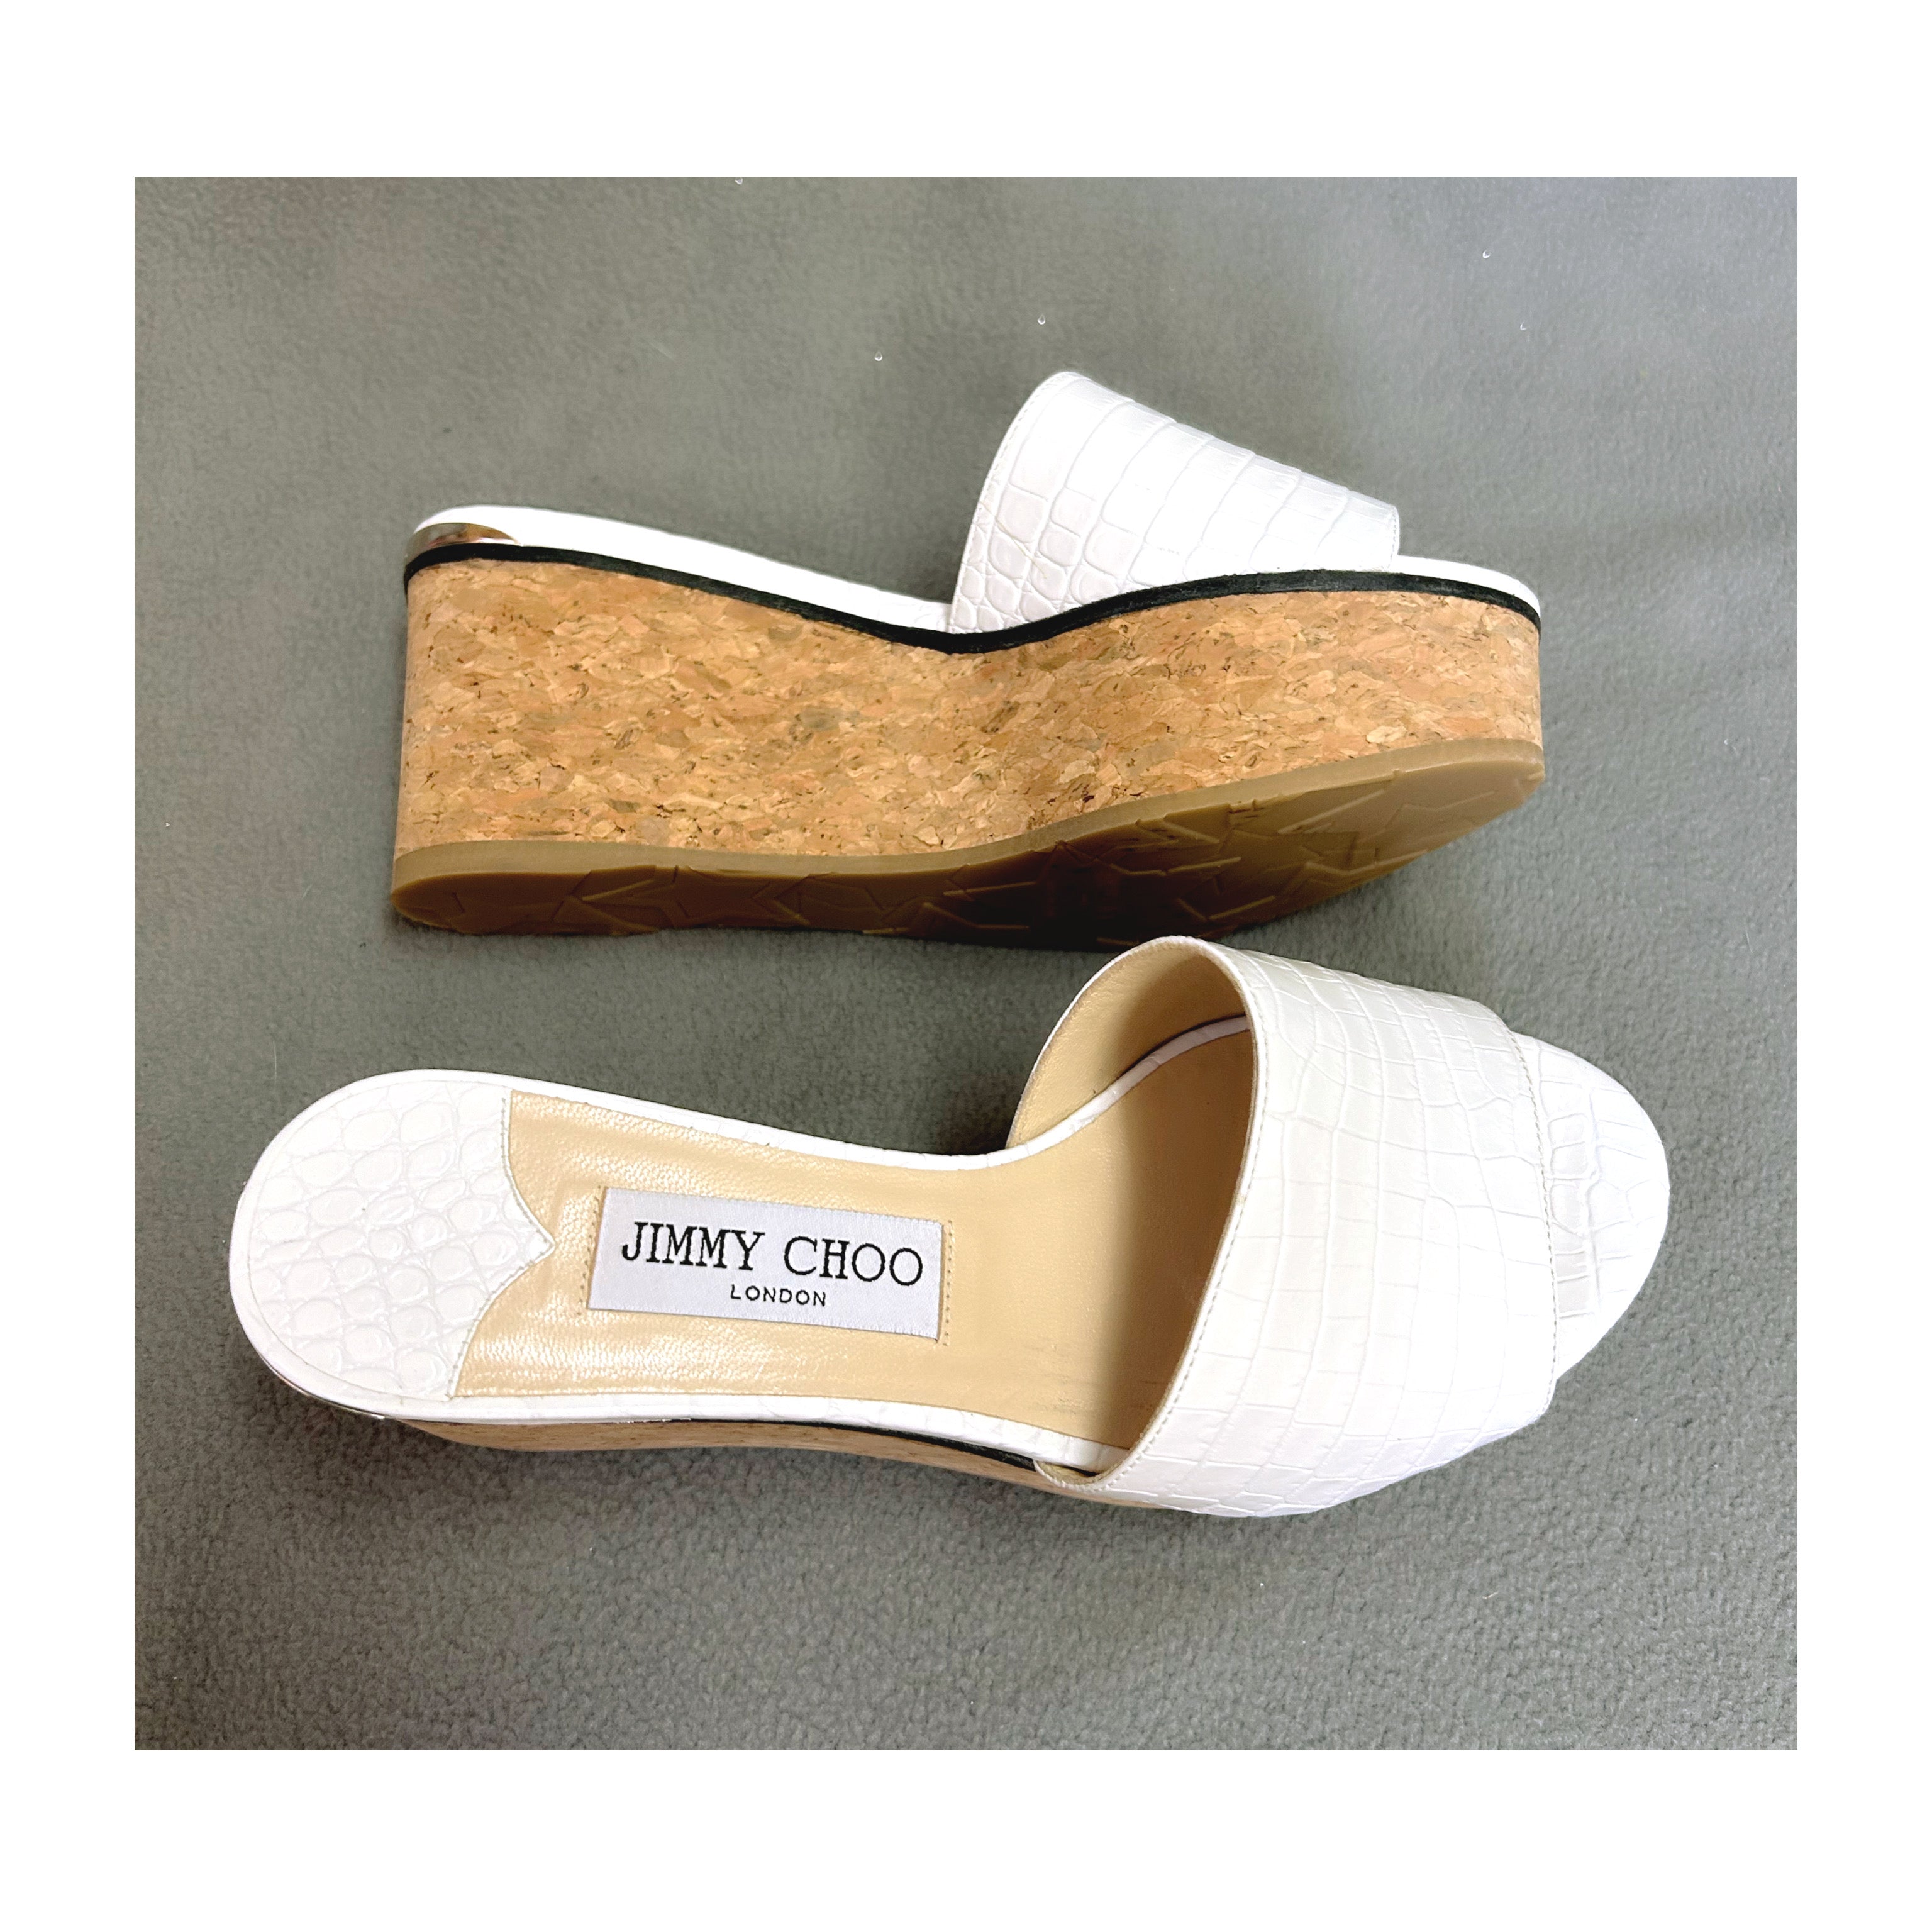 Jimmy Choo white "alligator" Dee Dee sandals, size 6, BRAND NEW W/O TAGS